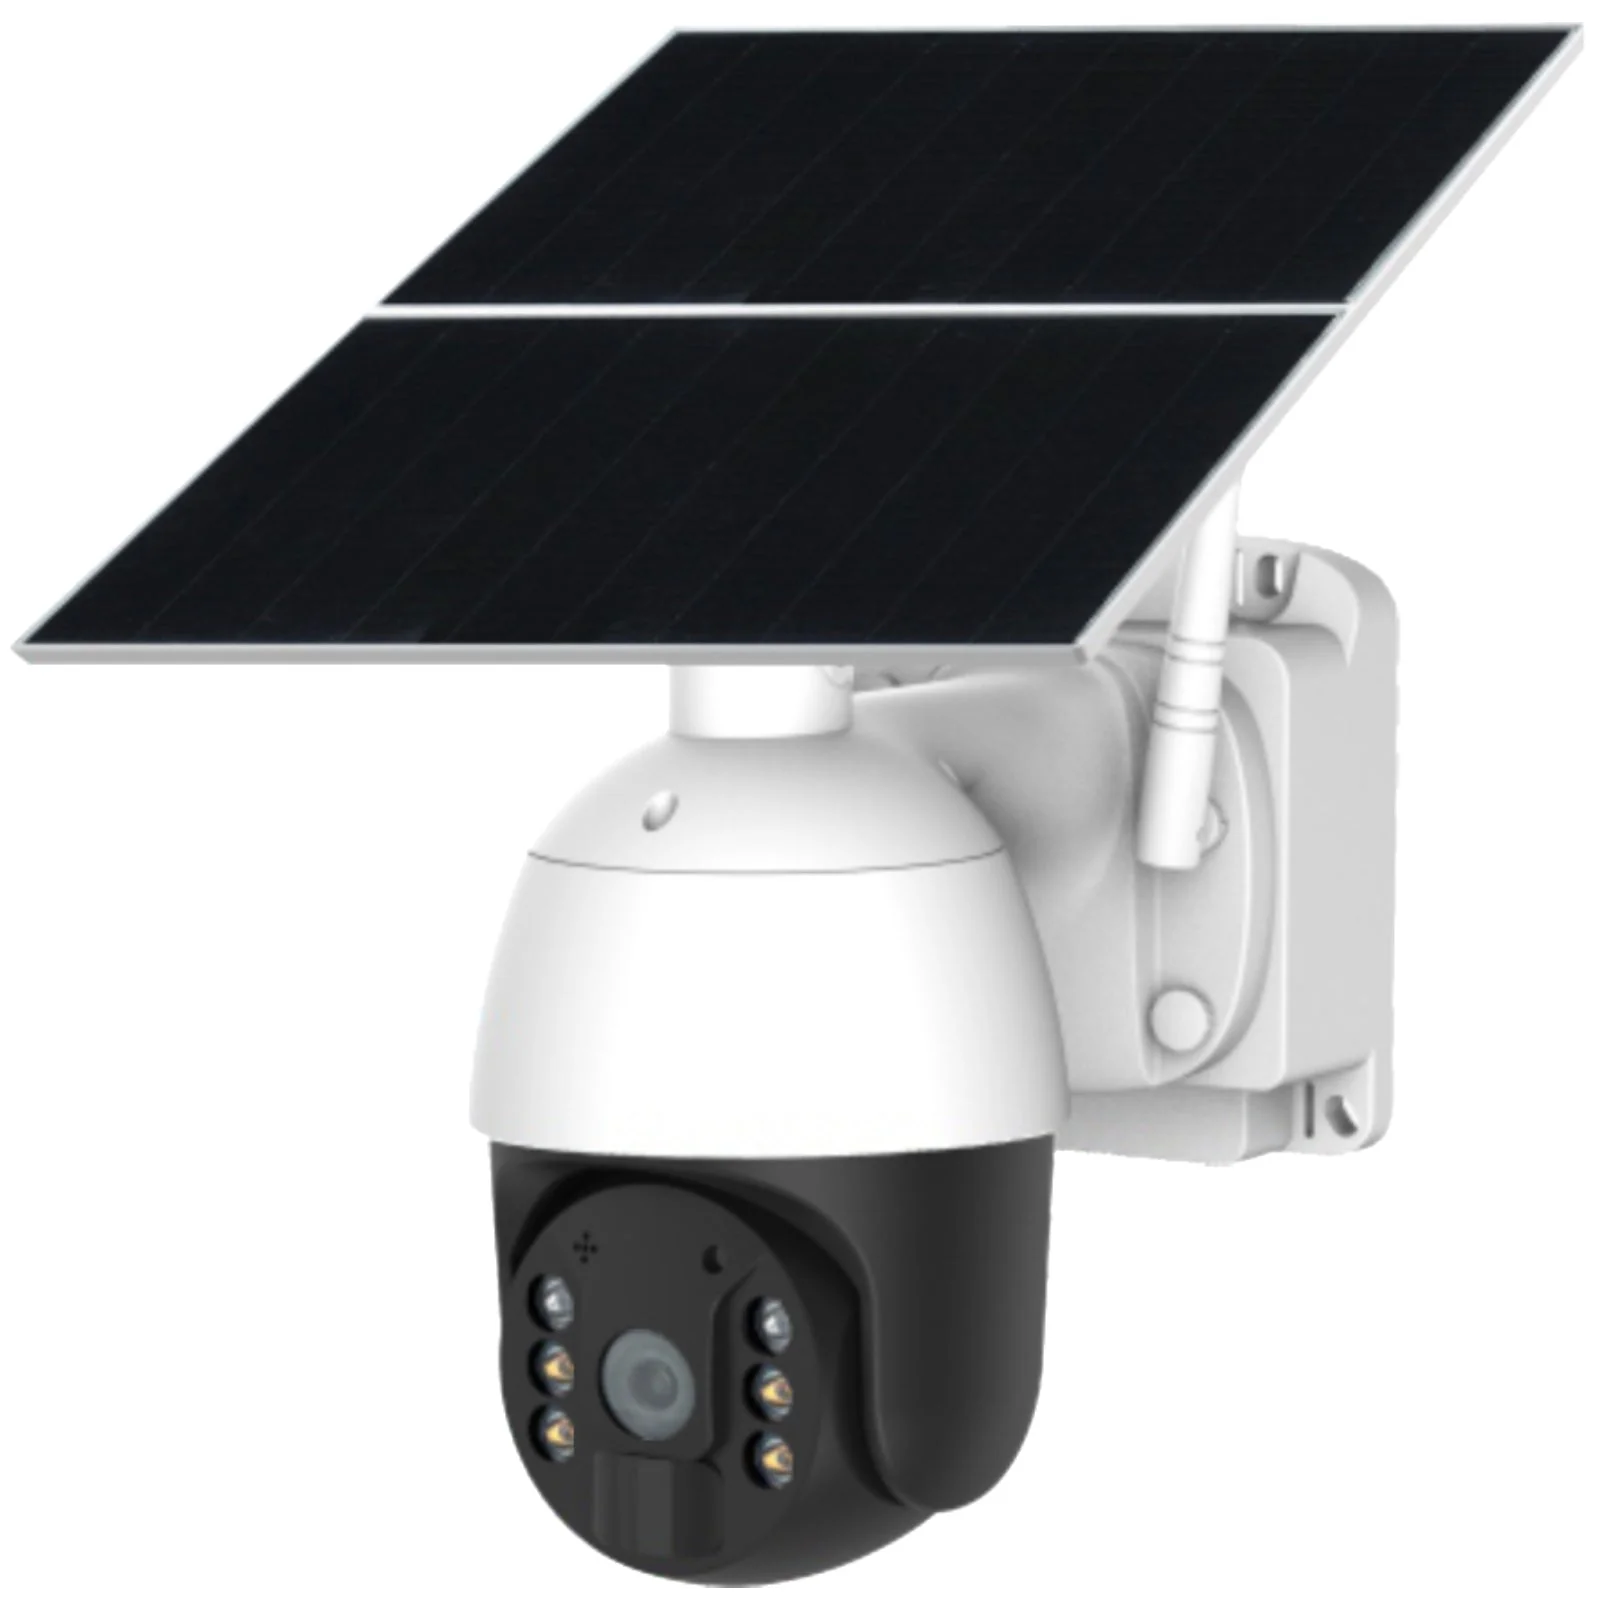 CRONY solar power 4G ptz camera sl100 كاميرا لوح شمسي